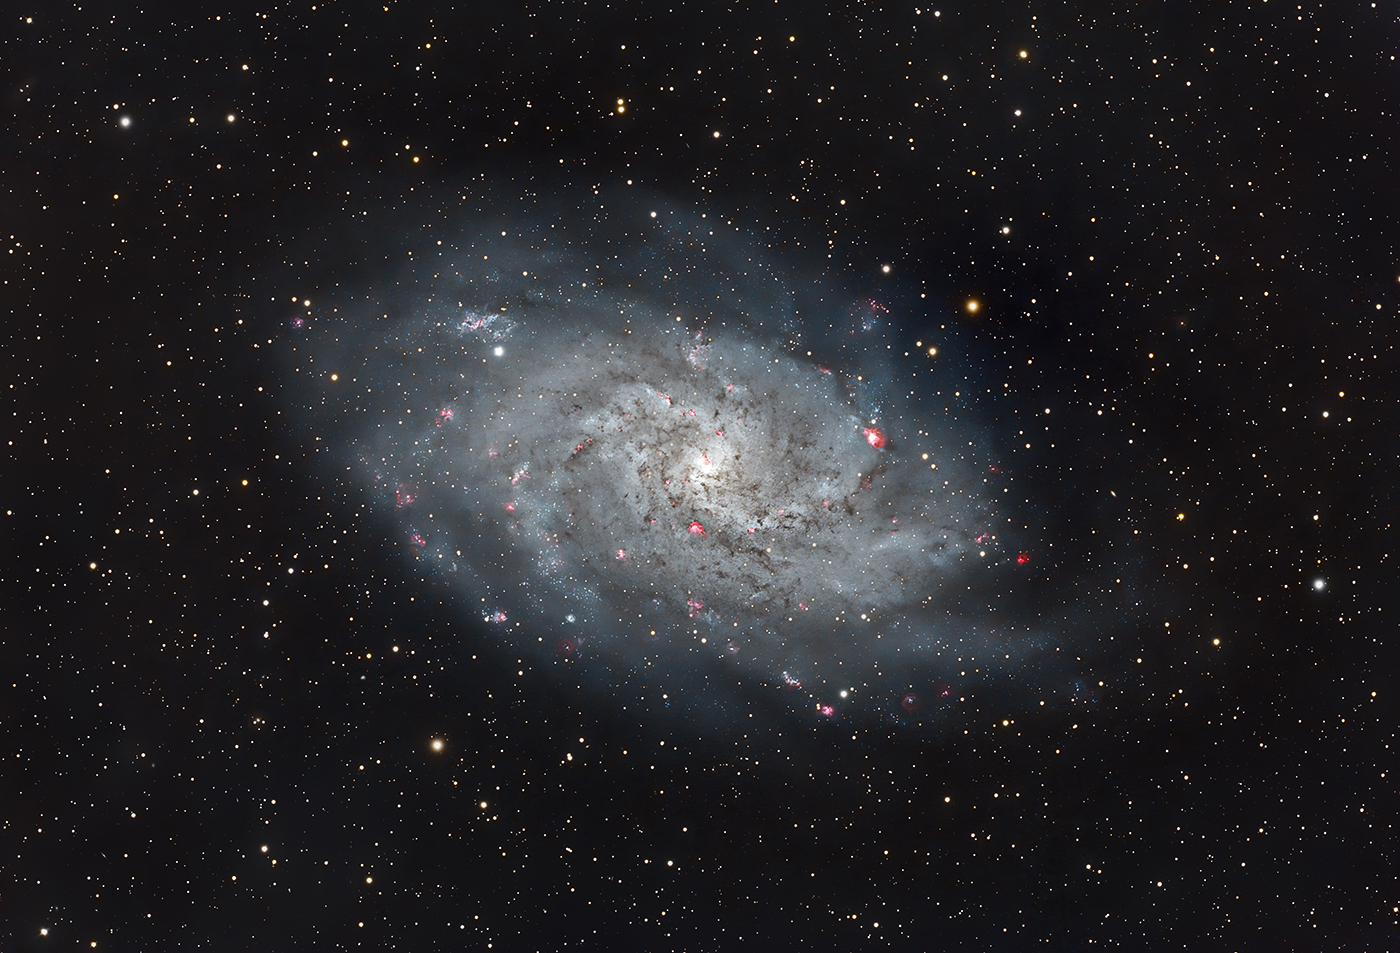 Triangulum Galaxy - M 33